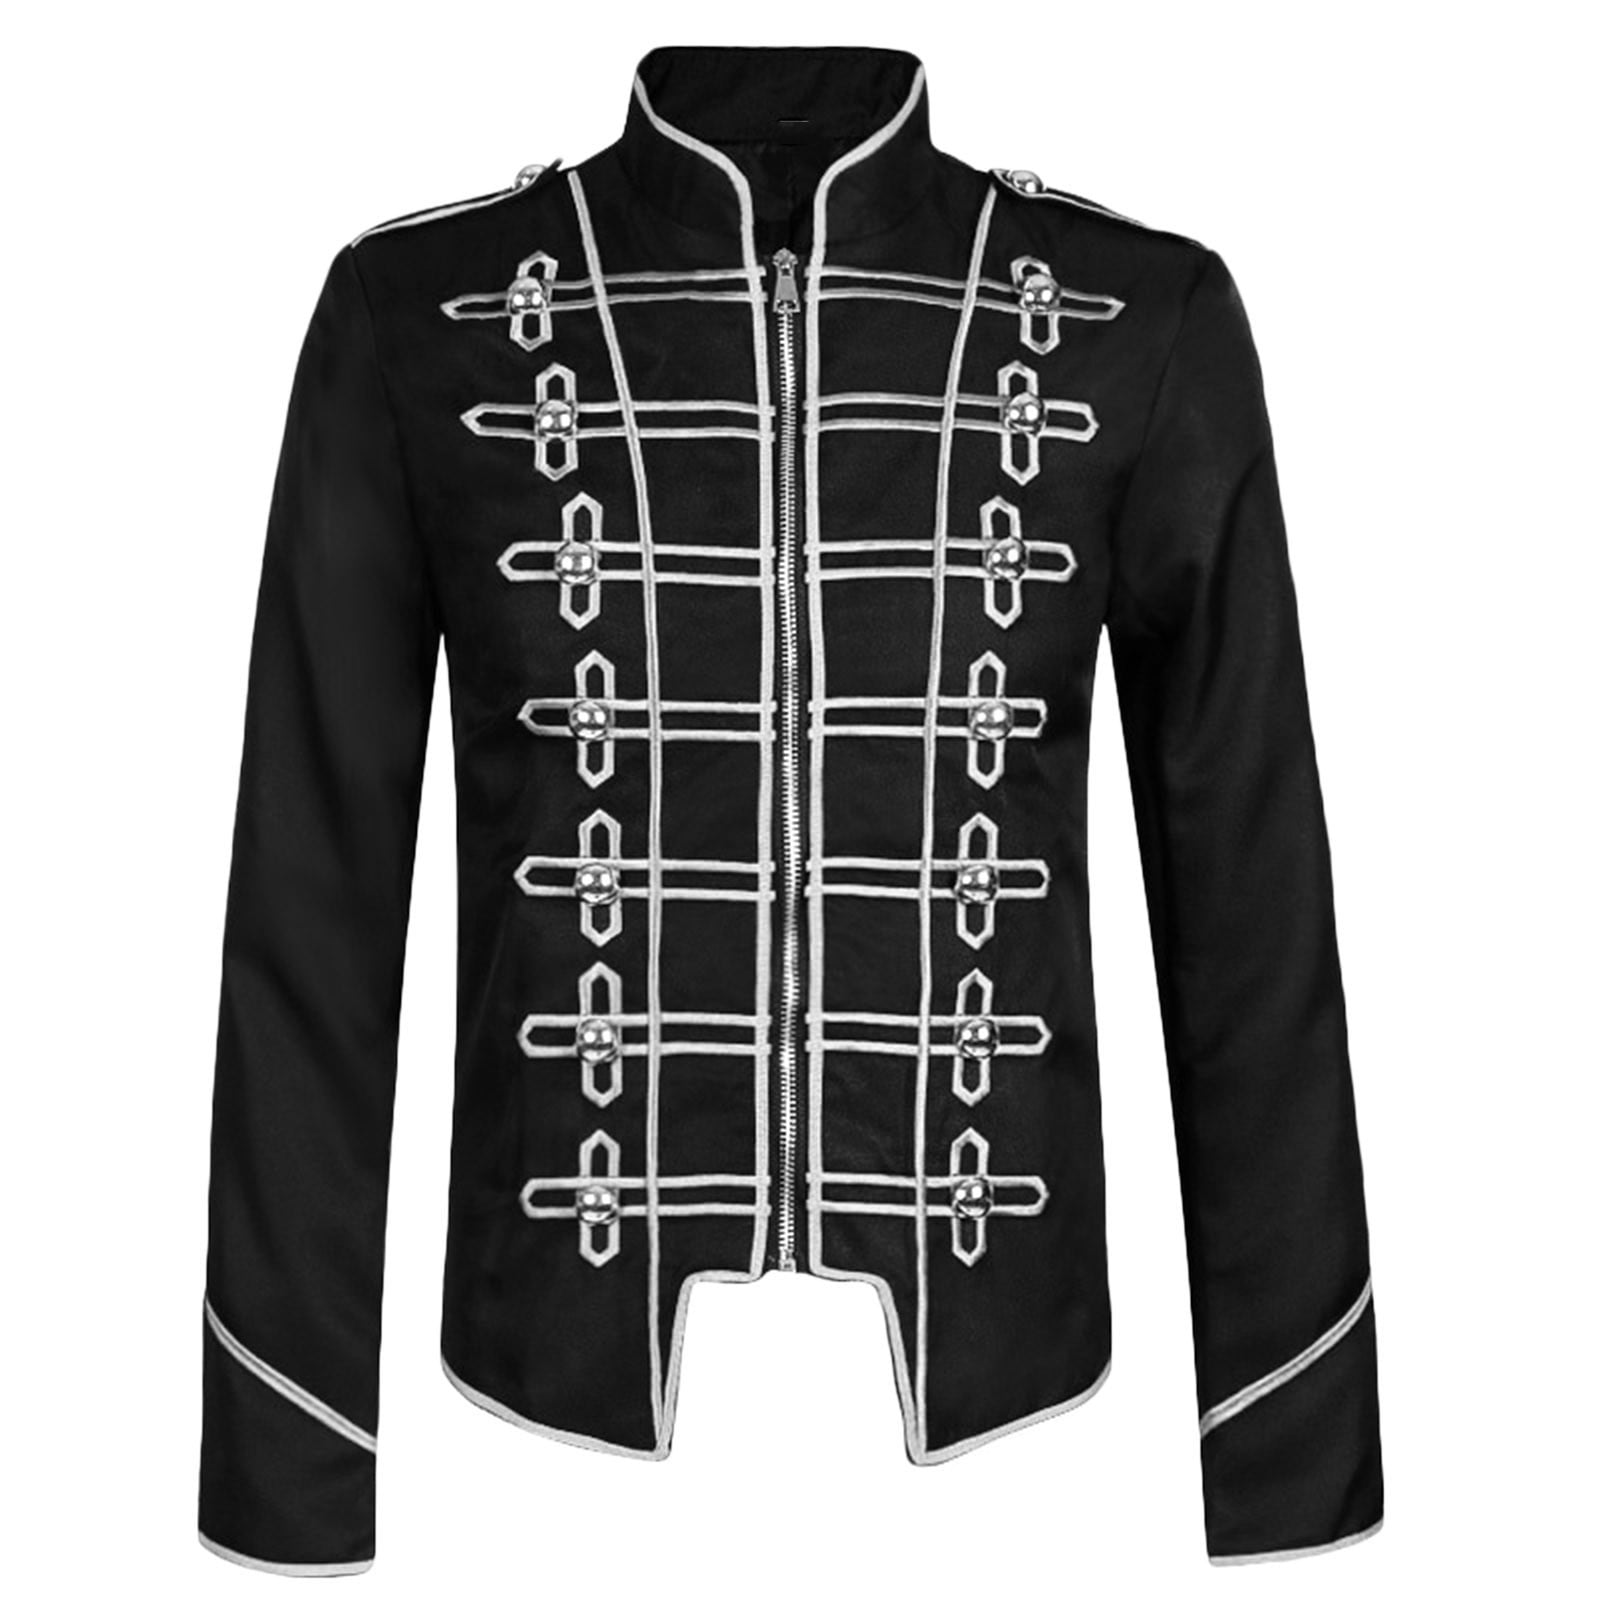 RO Rox Hussar Parade Steampunk Gothic Jacket